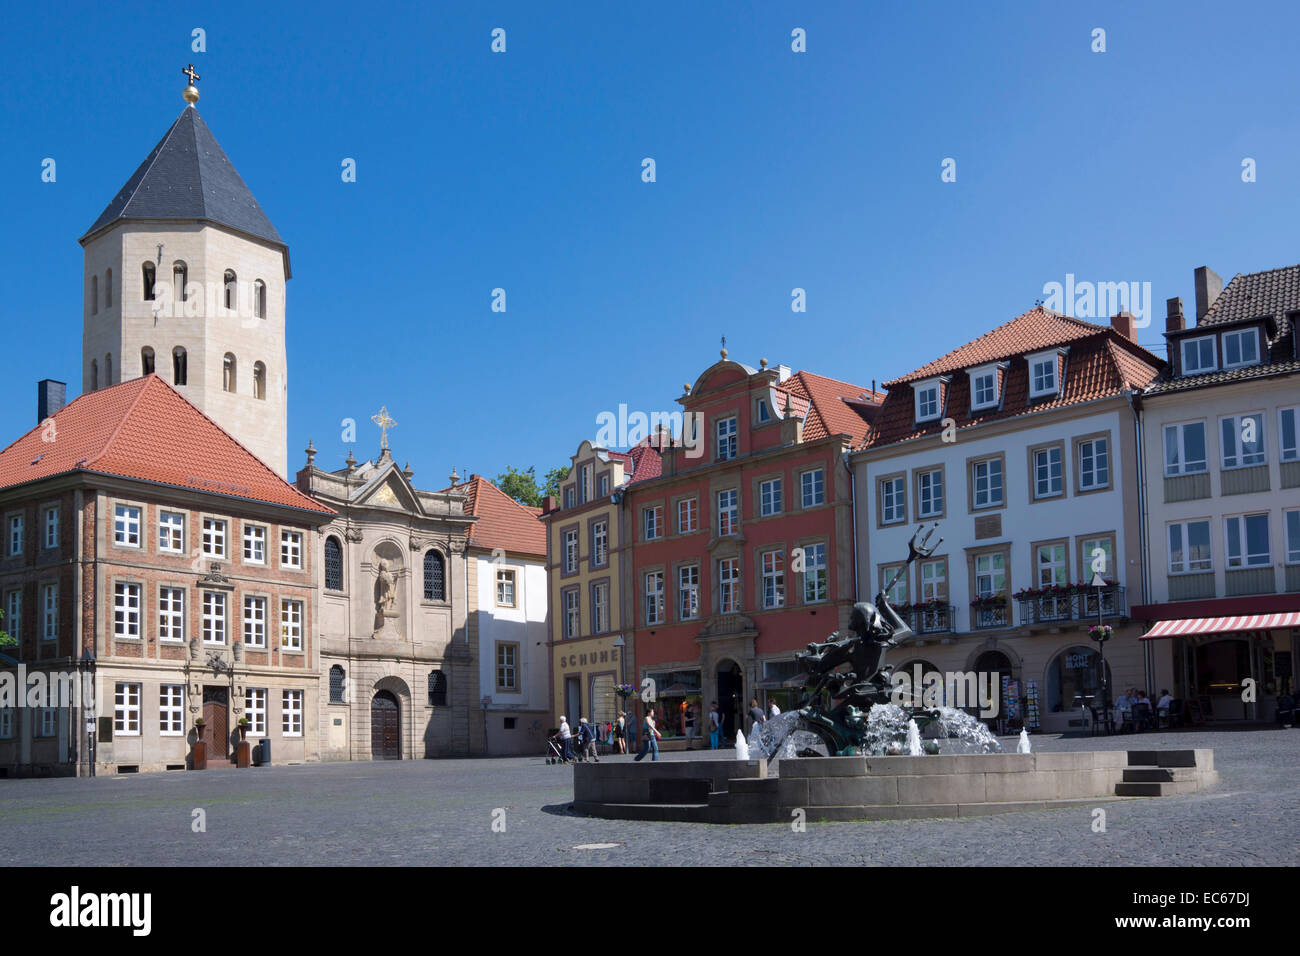 Market square with Gaukirche church St Ulrich, Paderborn, Ostwestfalen Lippe region, North Rhine Westphalia, Germany, Europe Stock Photo